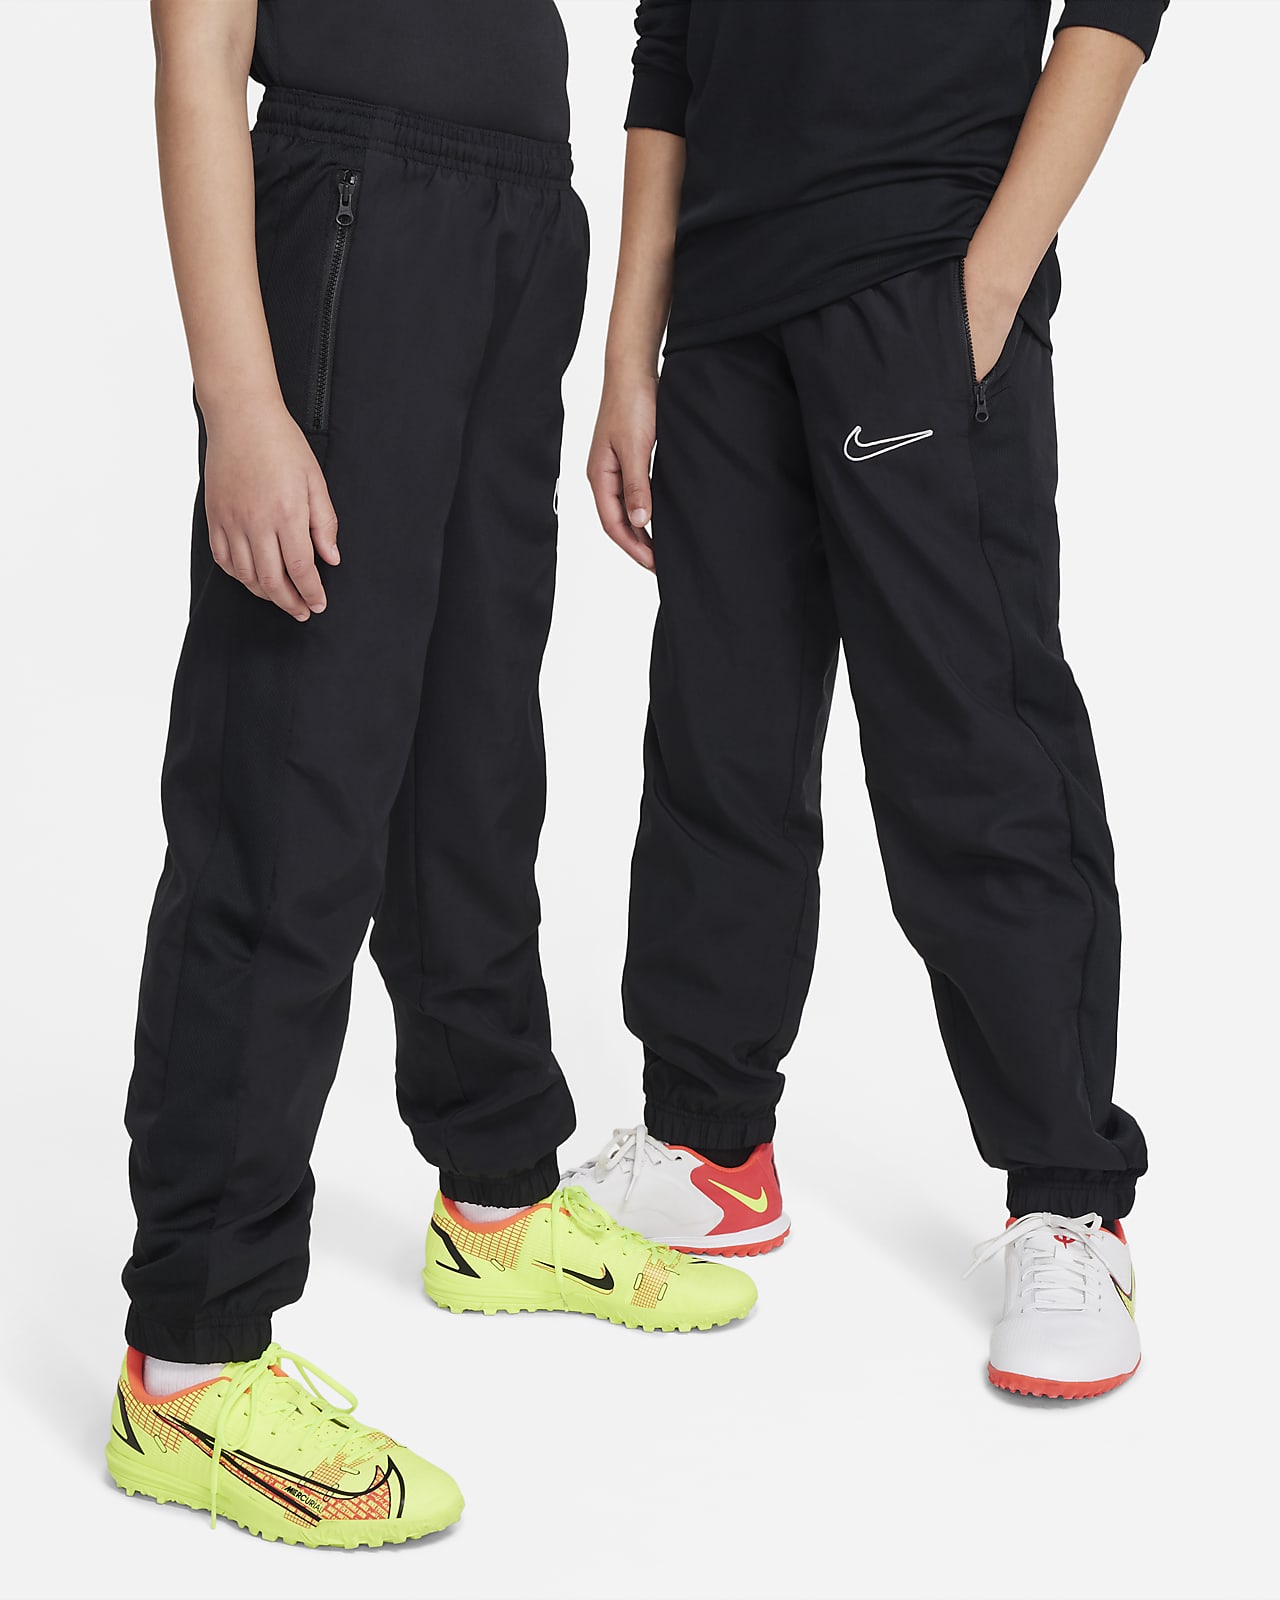 Nike Dri-FIT Academy23 Pantalons de futbol - Nen/a